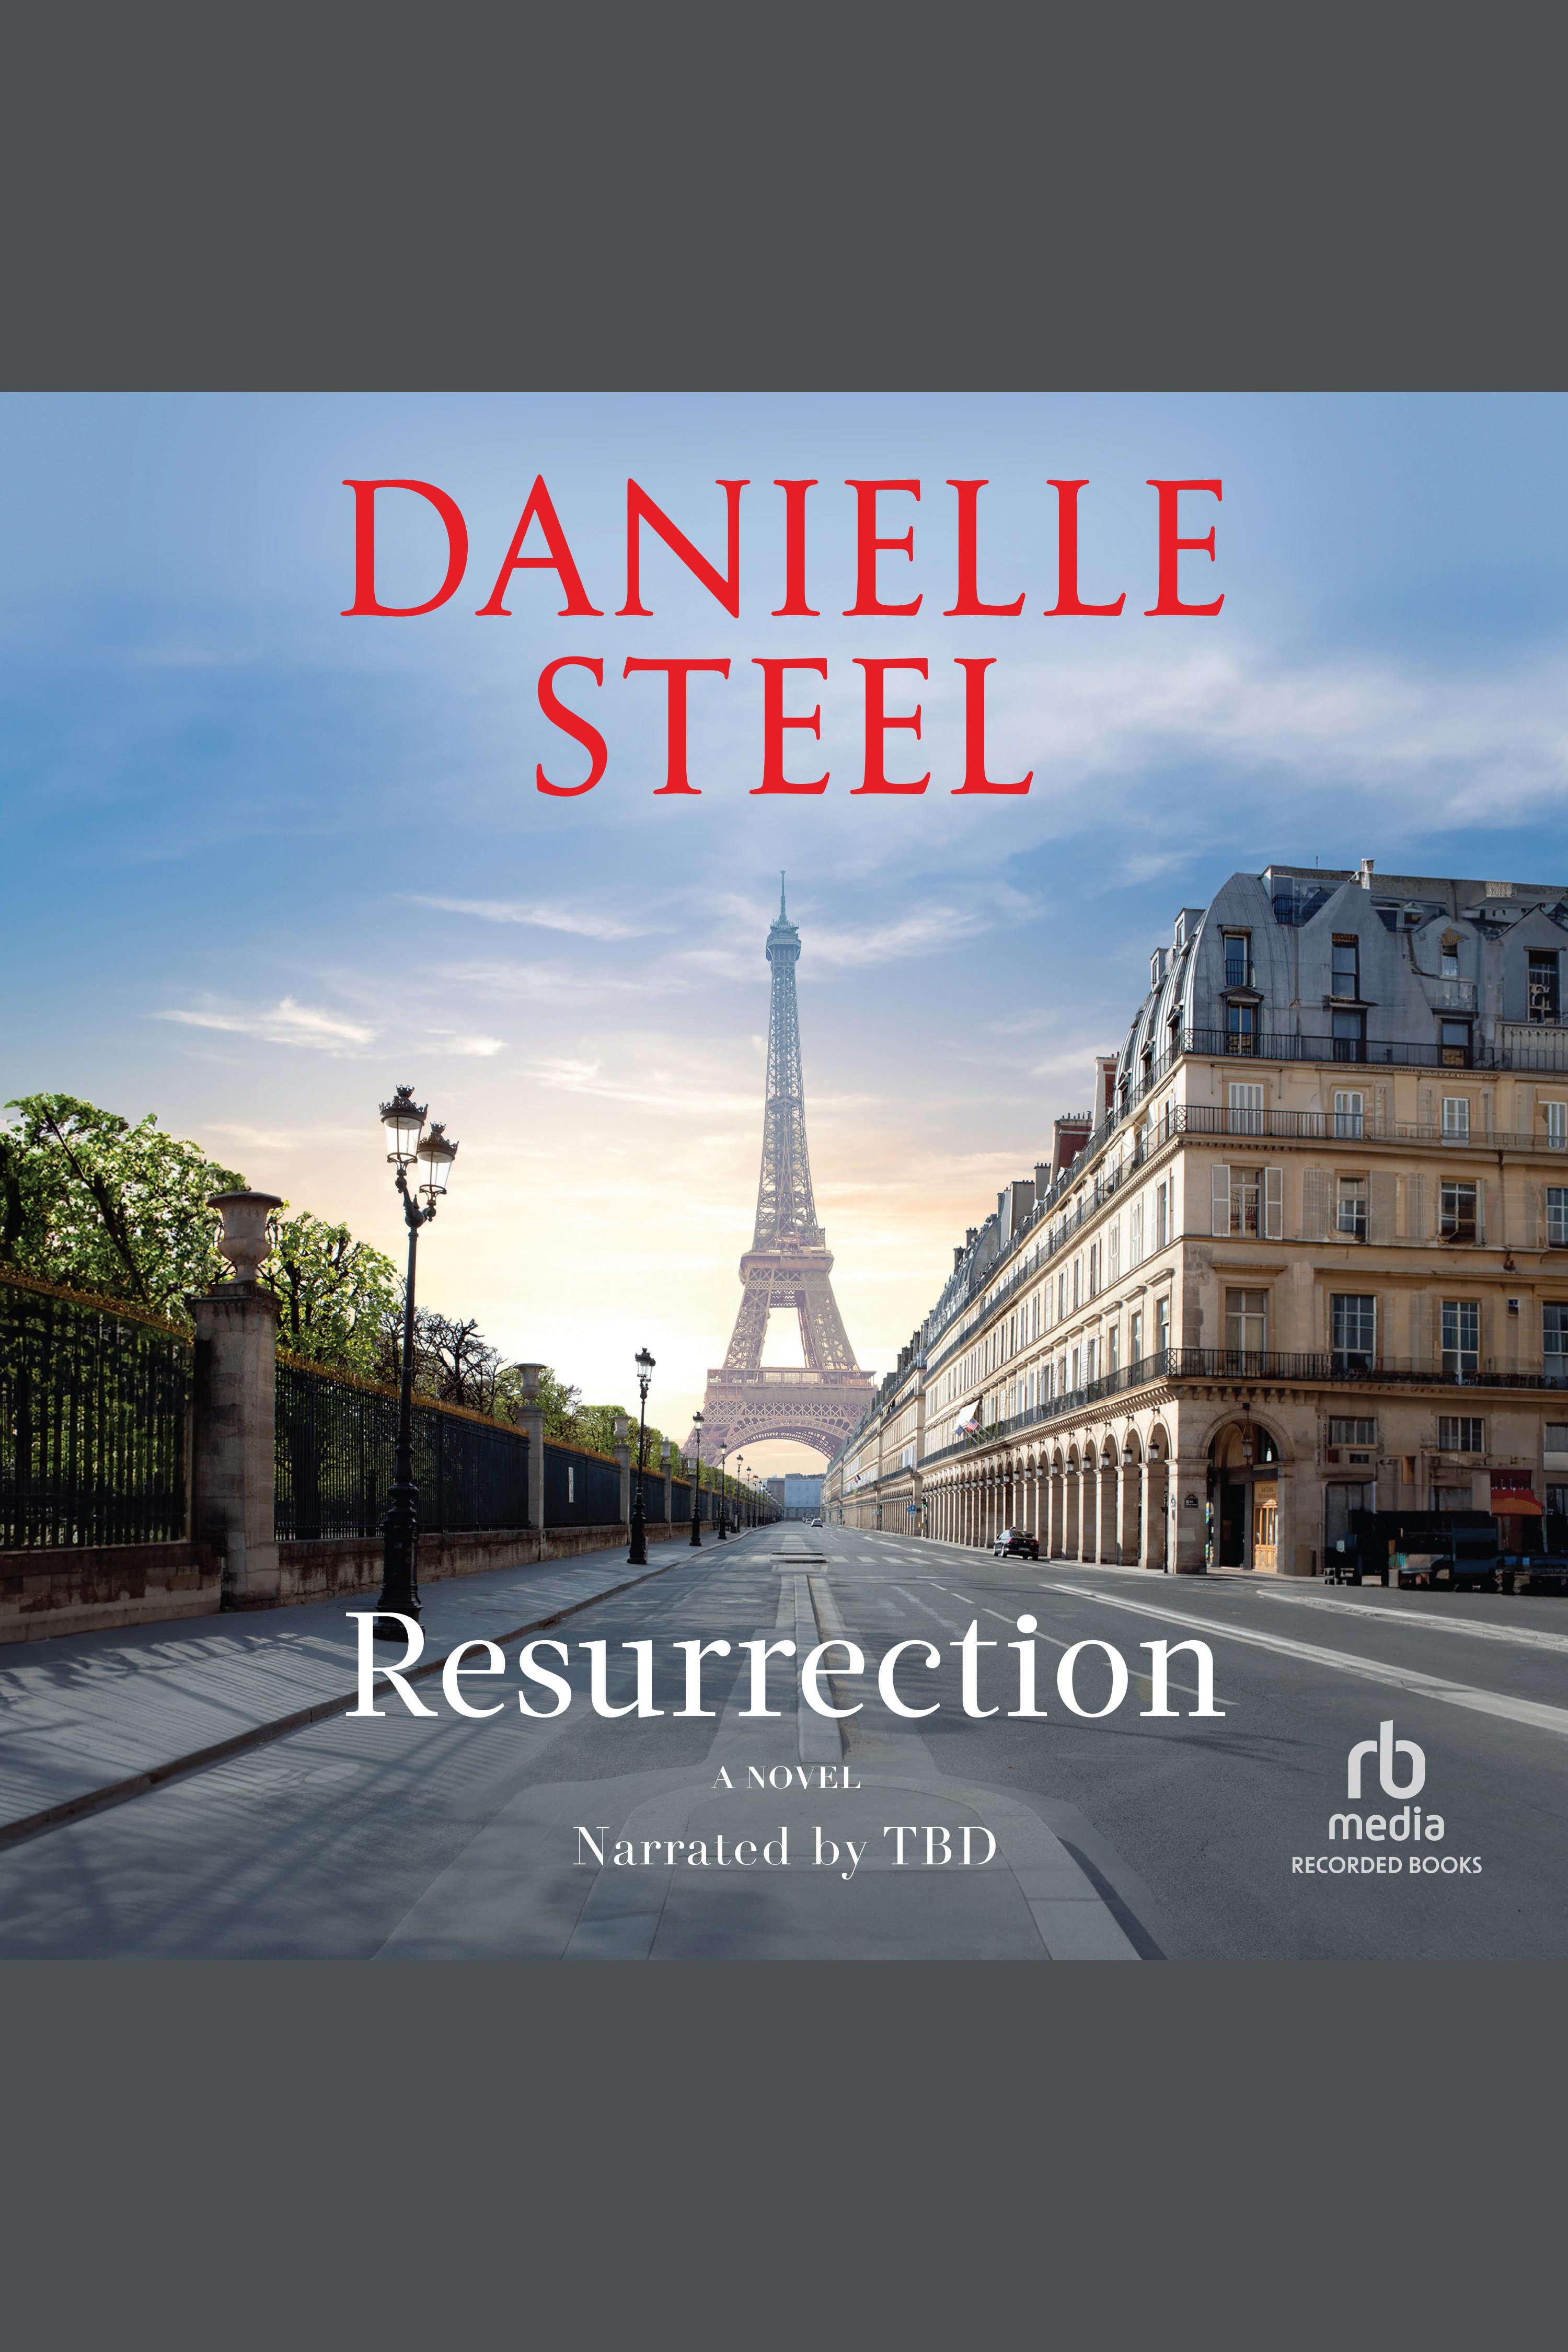 Resurrection cover image